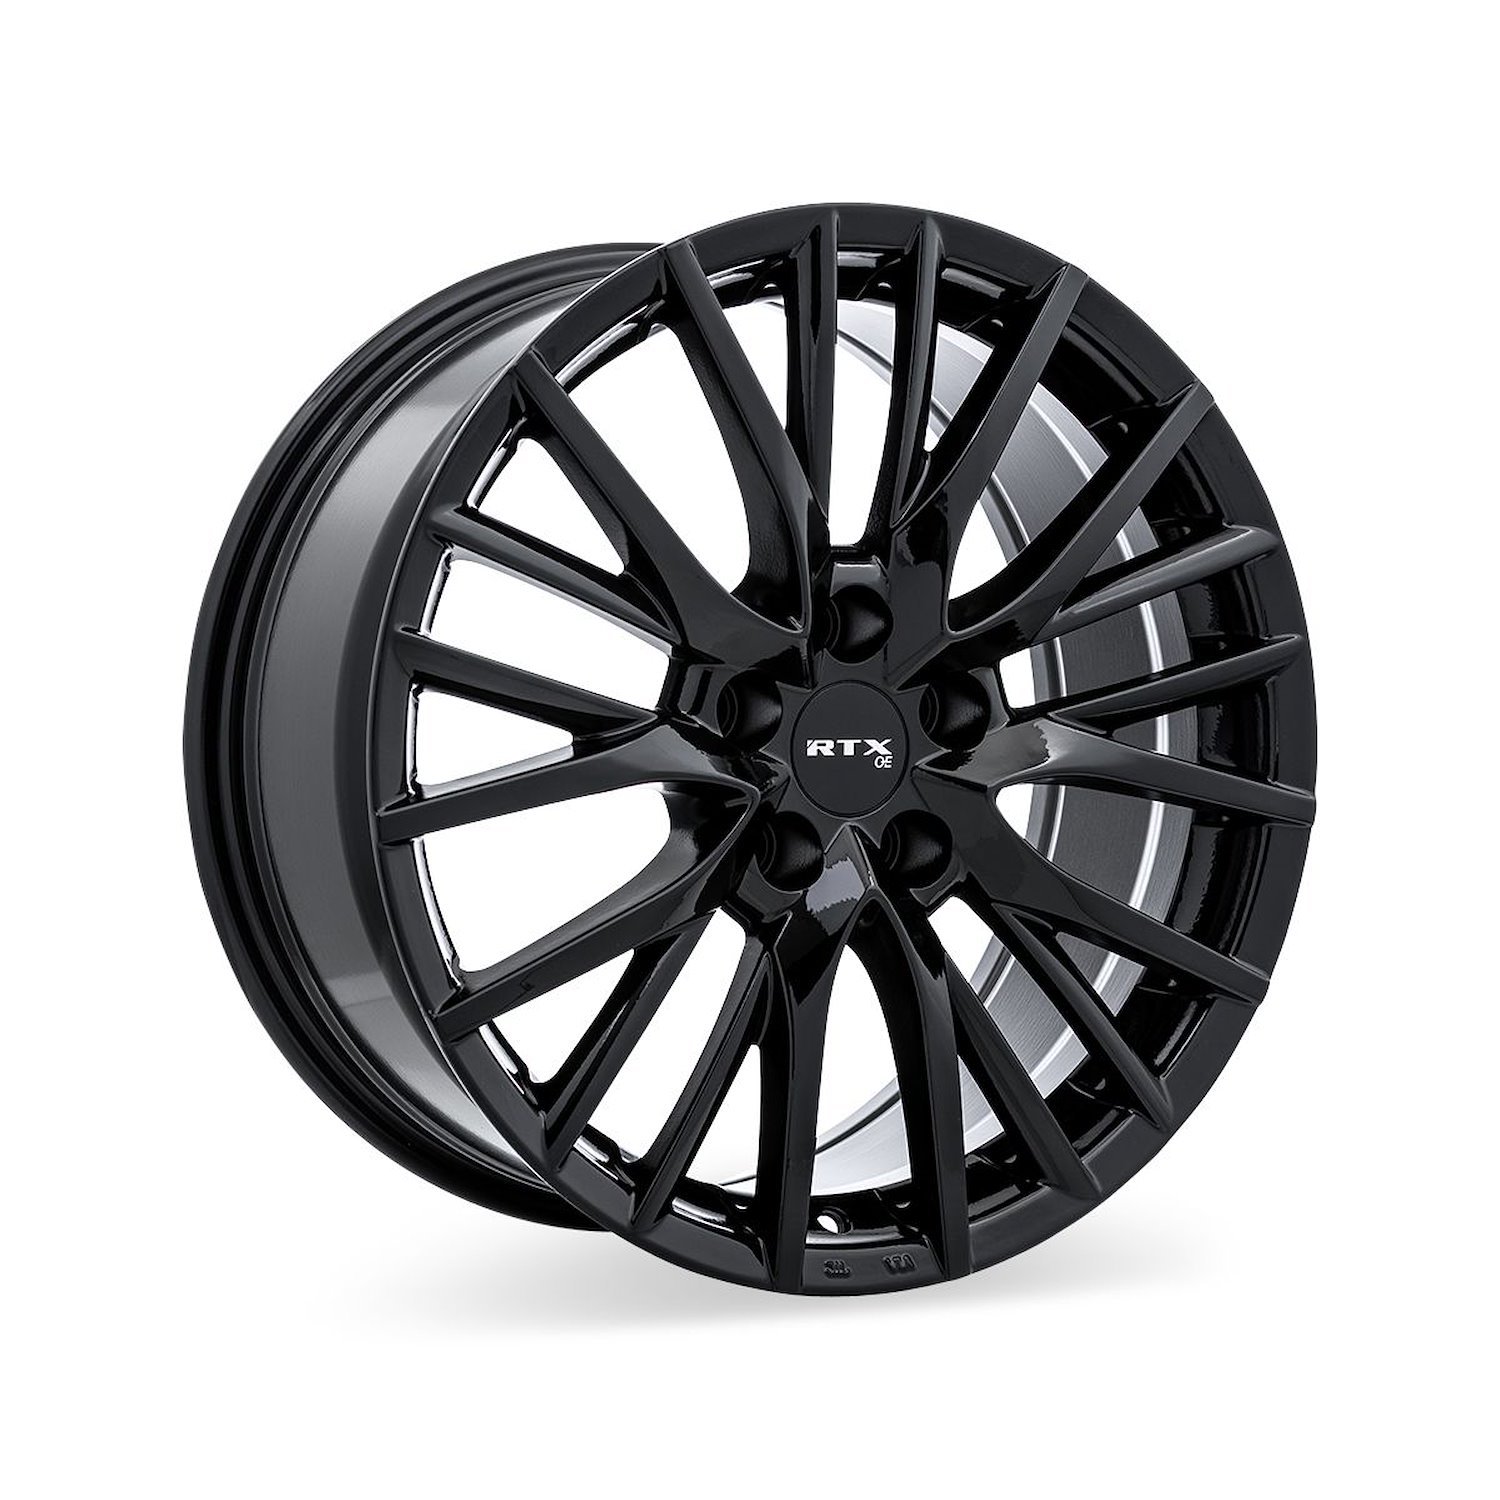 083271 OE-Series Kyo Wheel [Size: 19" x 8"] Gloss Black Finish